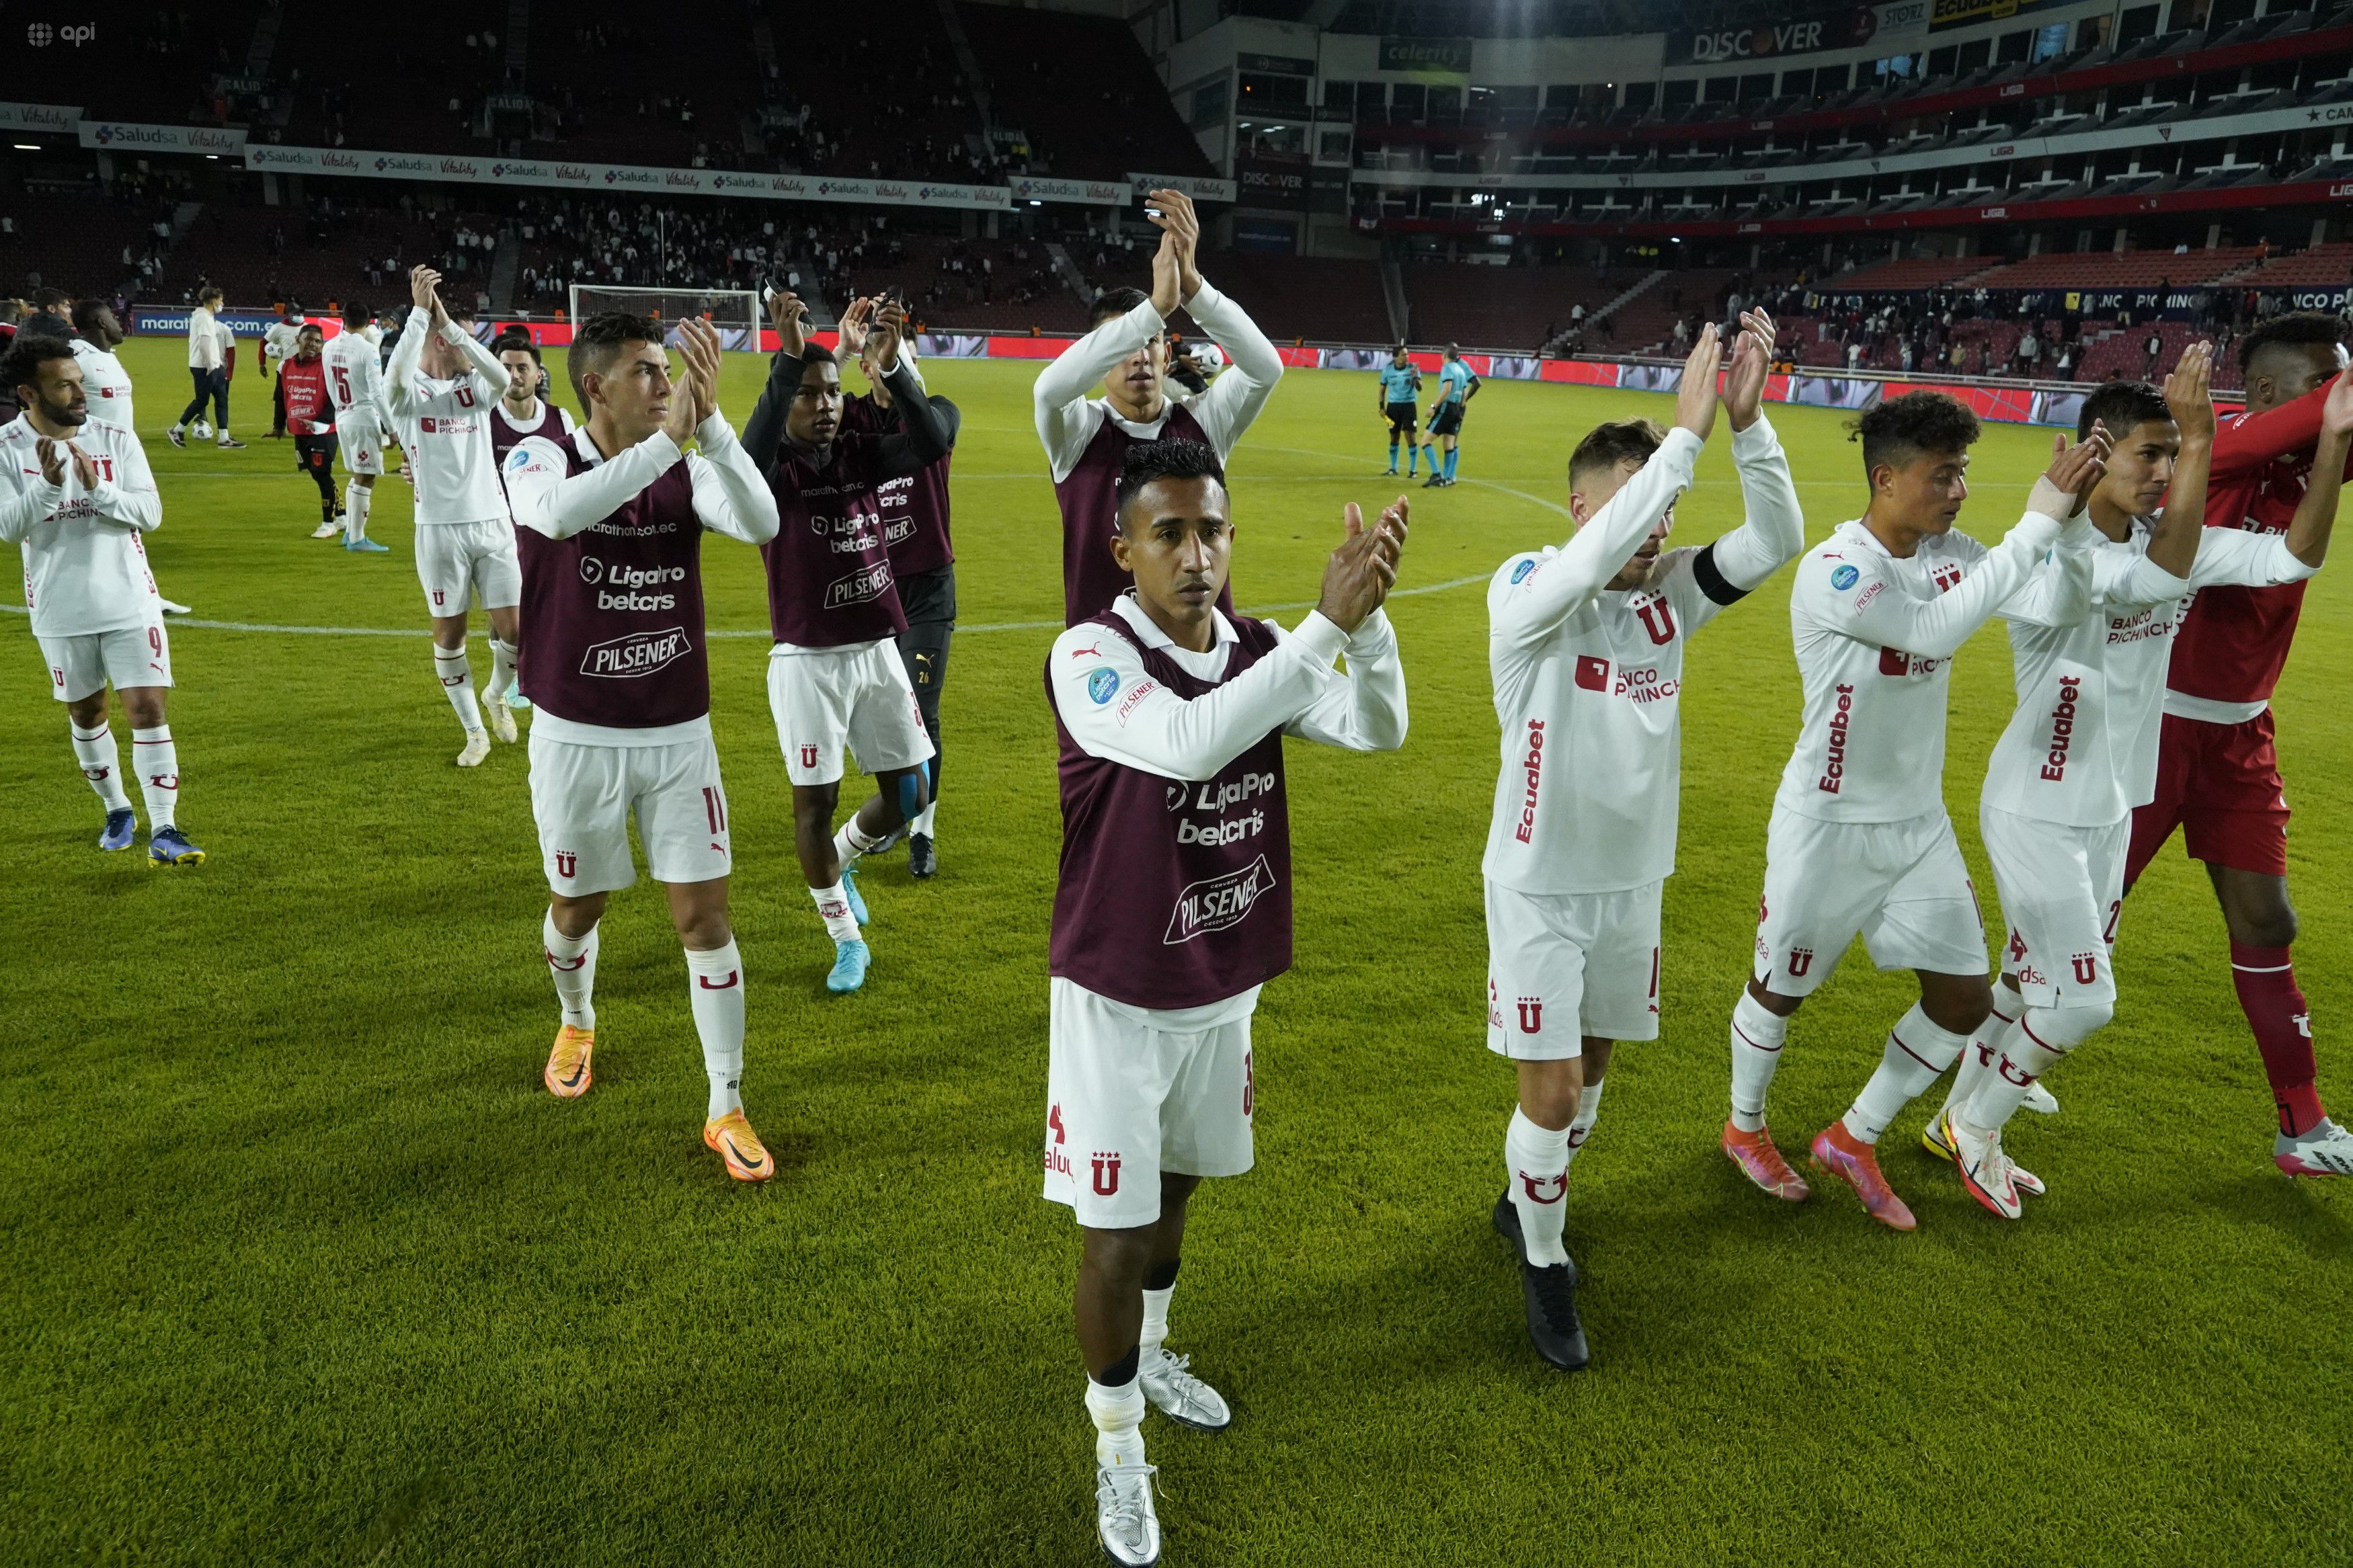 Victoria alivia una ‘mala semana’ para Liga de Quito